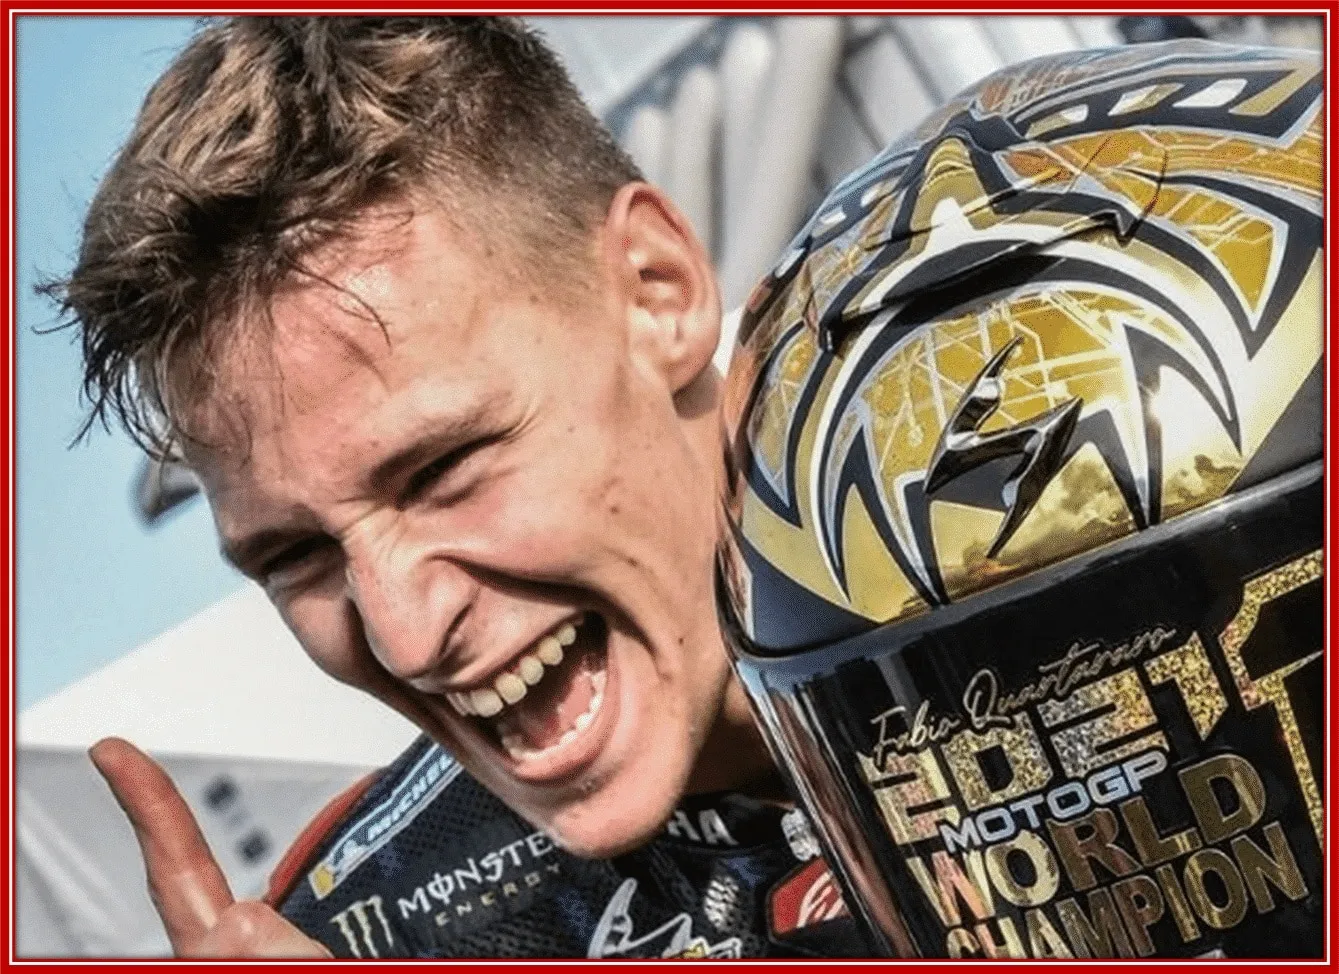 The Joy of emerging the 2021 MotoGP World Champion.